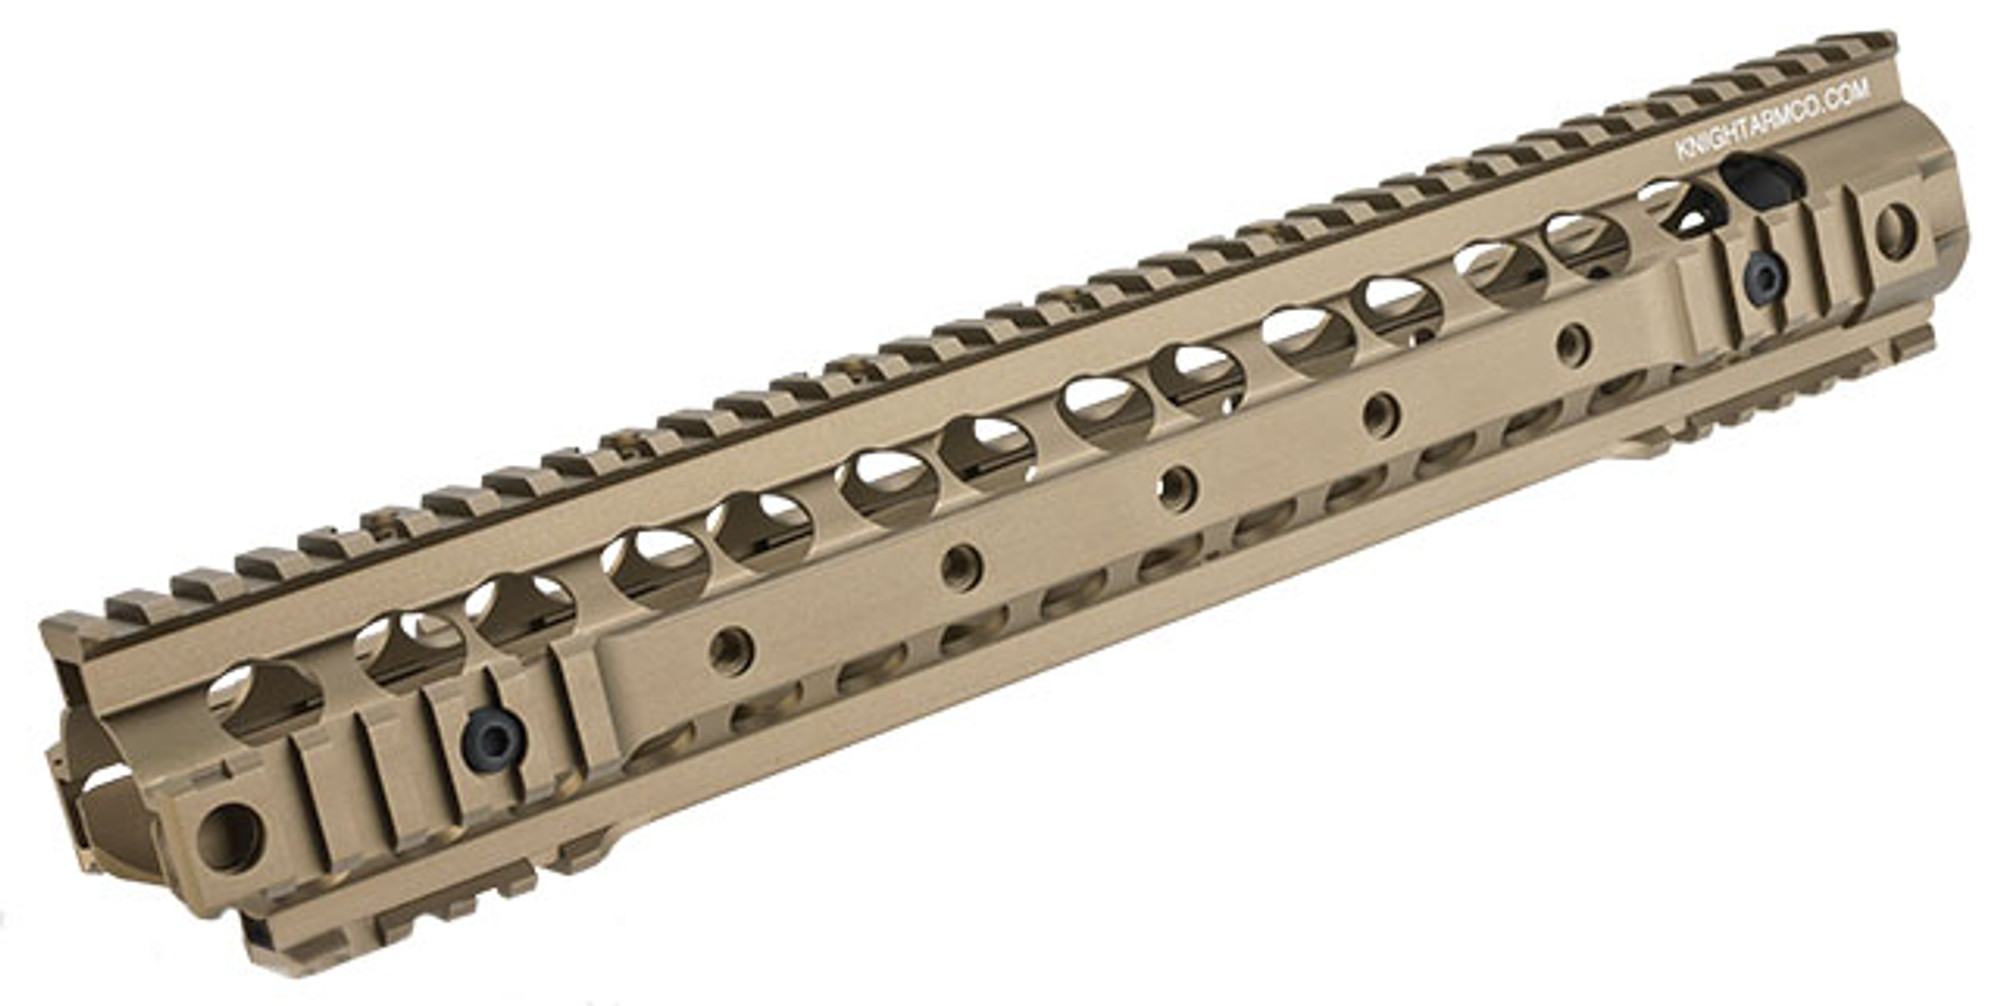 Knight's Armament Co URX 3.1 Free Float Rail System for M4 / M16 Series Airsoft AEG Rifles - 13.75" / Tan